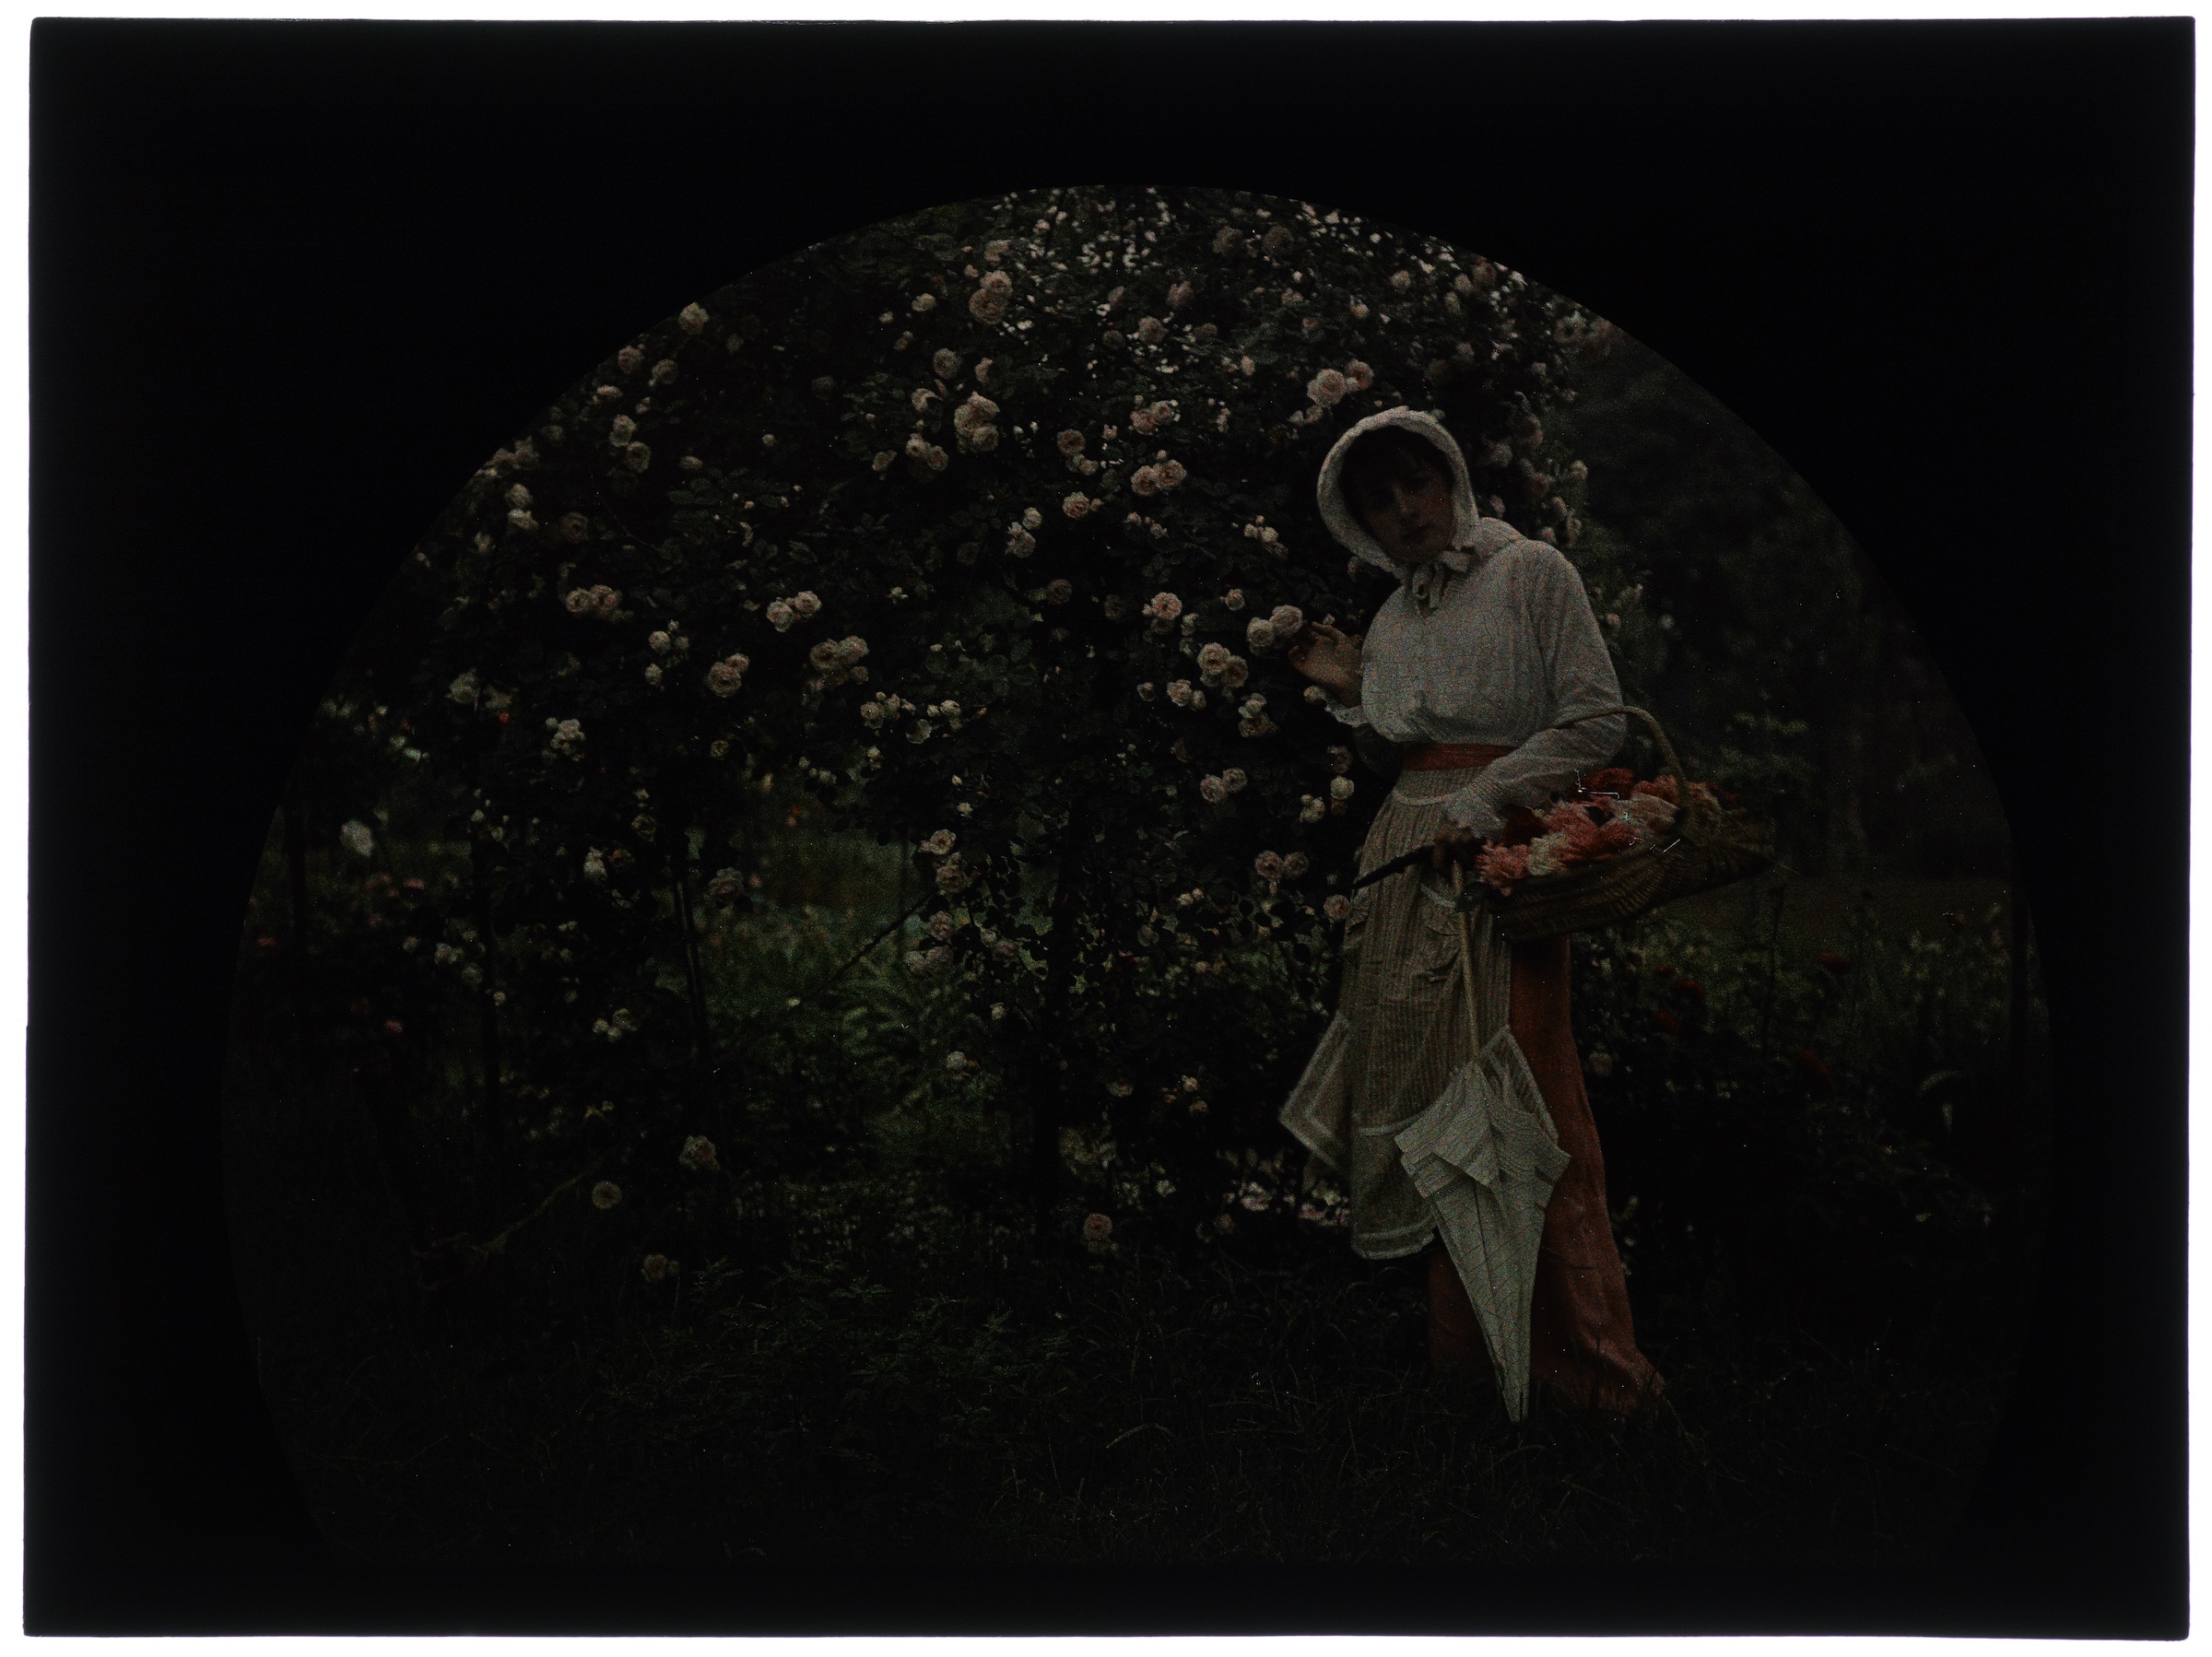 Femme en hâlette au jardin fleuri